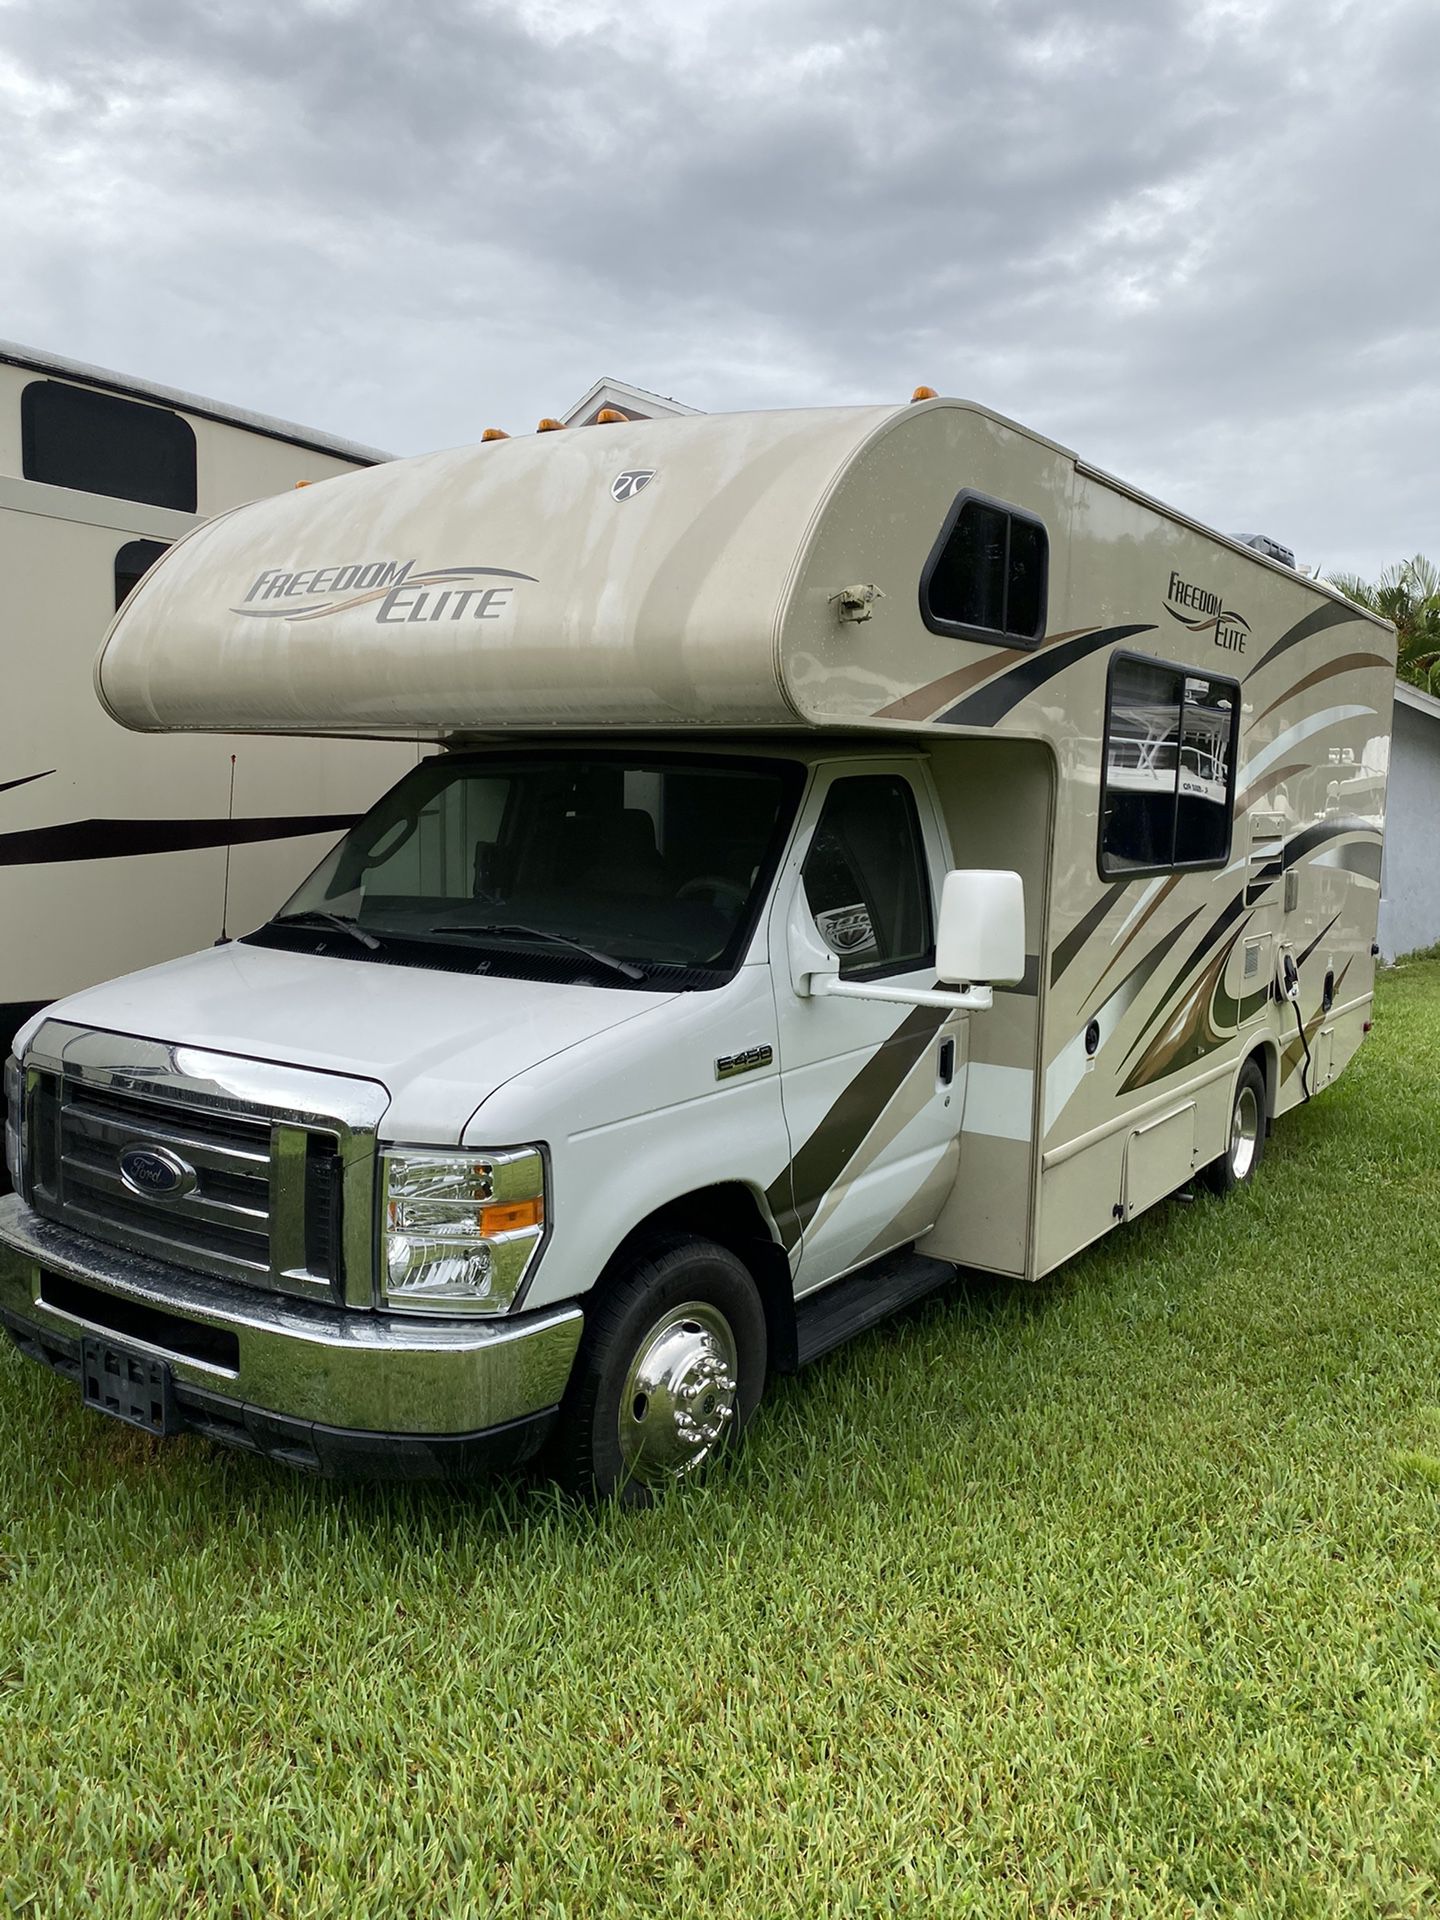 2016 Thor Motor coach freedom elite E-450 Travel trailer